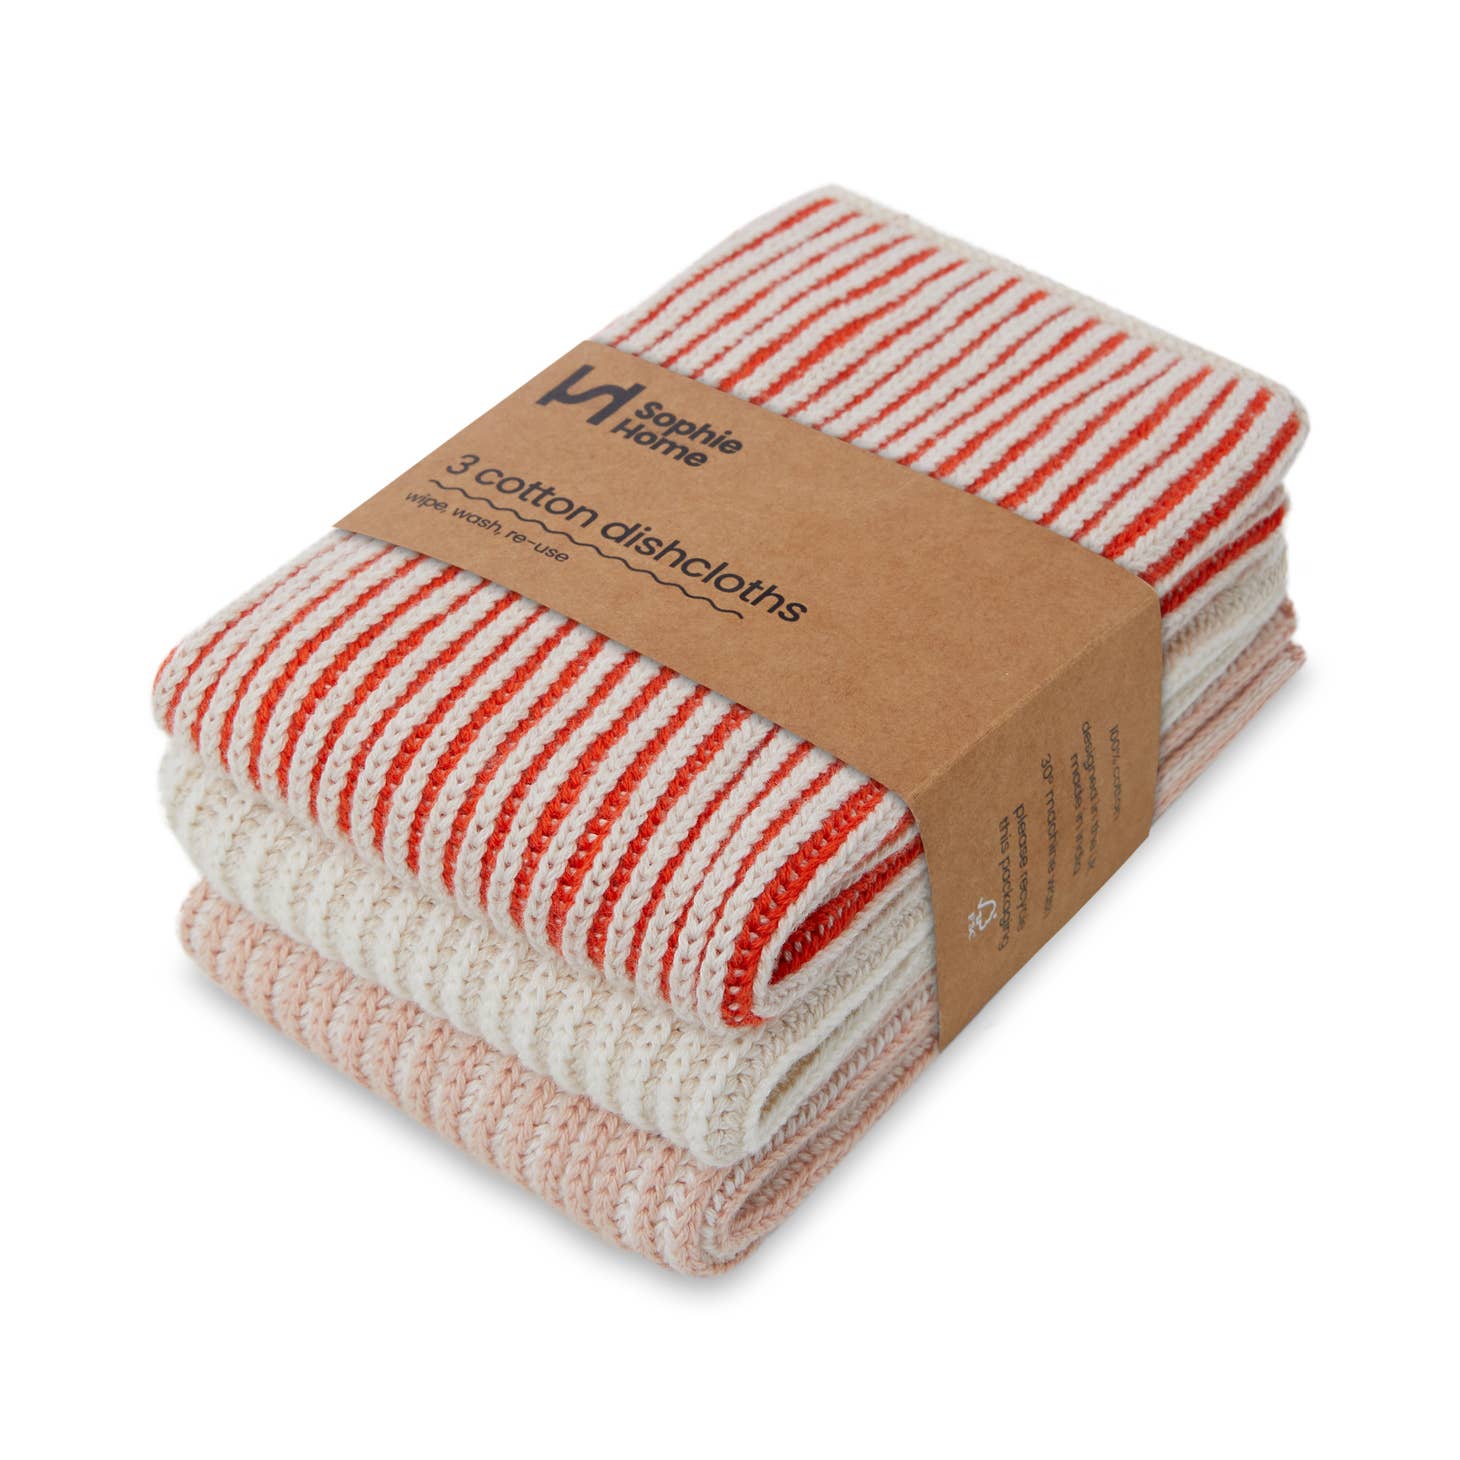 Sophie Home Reusable & Eco-Friendly Cotton Knit Dishcloths